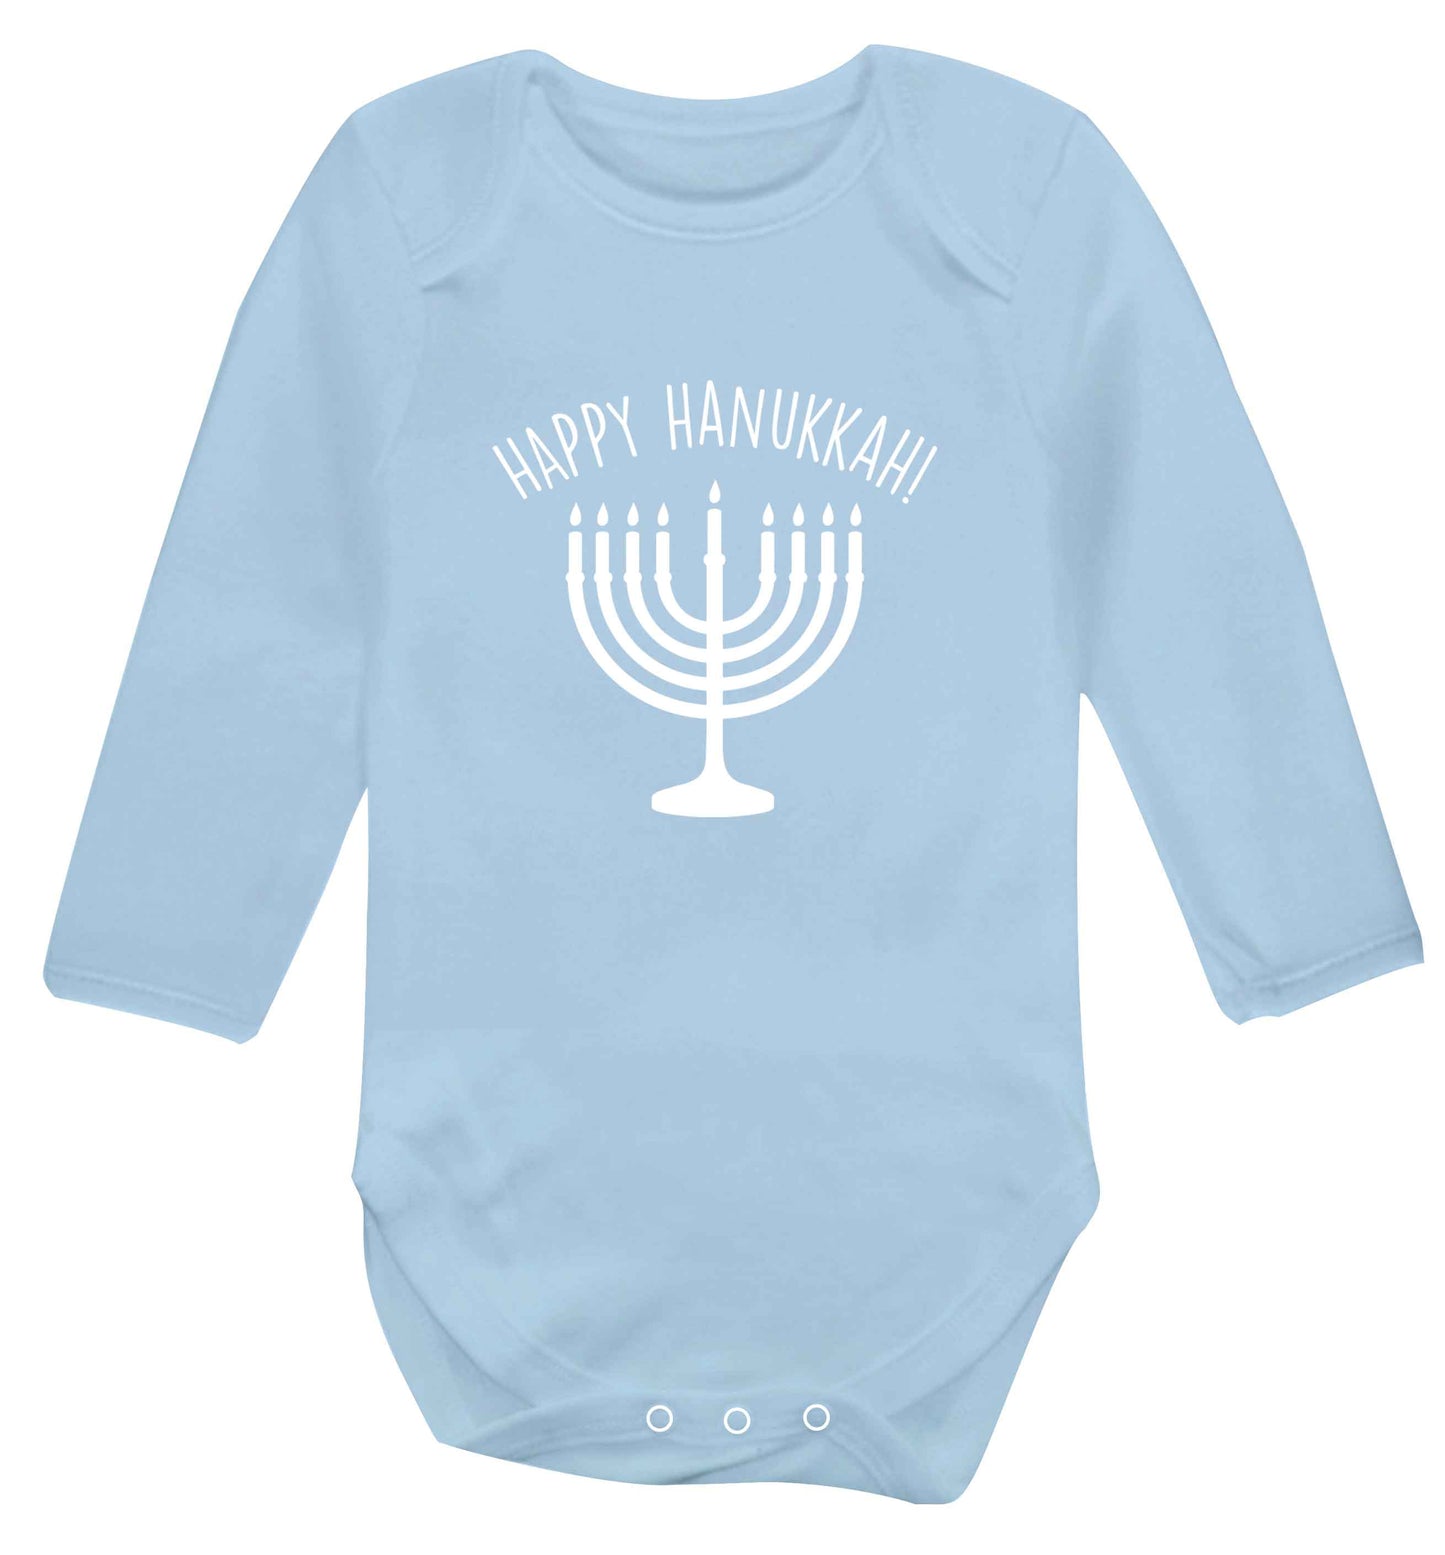 Happy hanukkah baby vest long sleeved pale blue 6-12 months